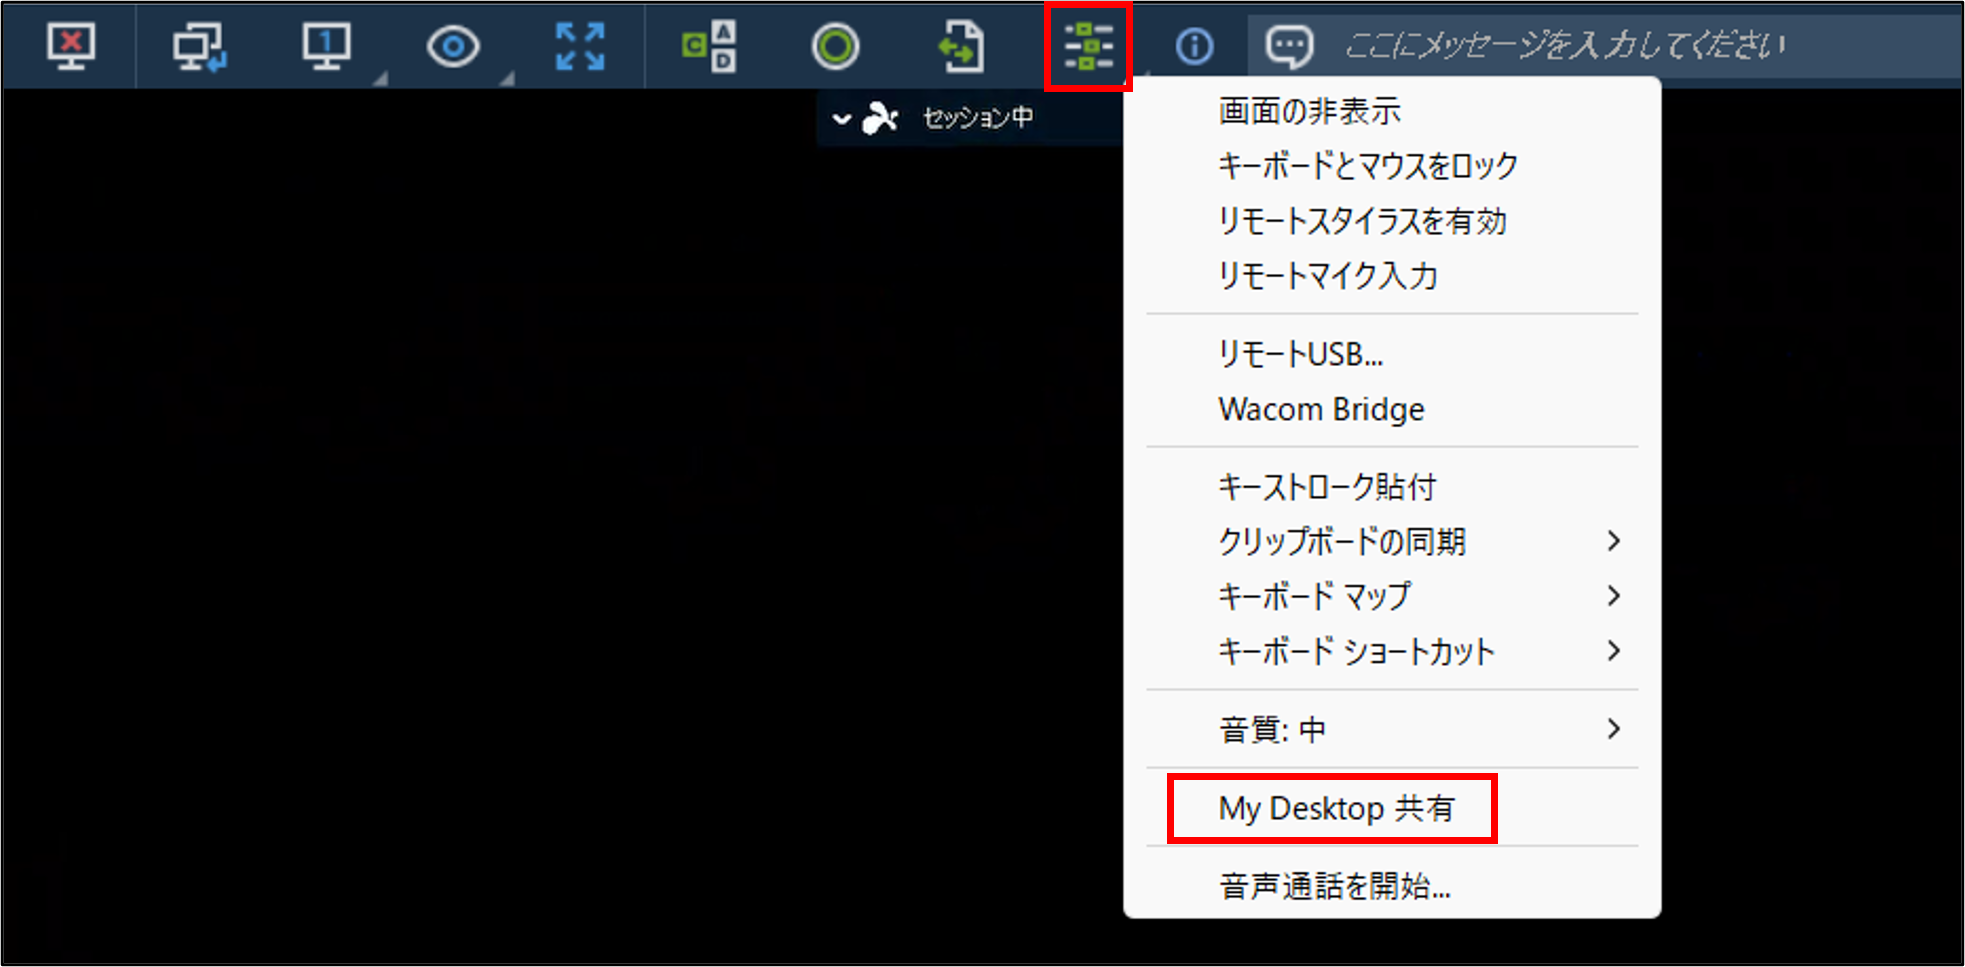 My Desktop共有+14_240125.png